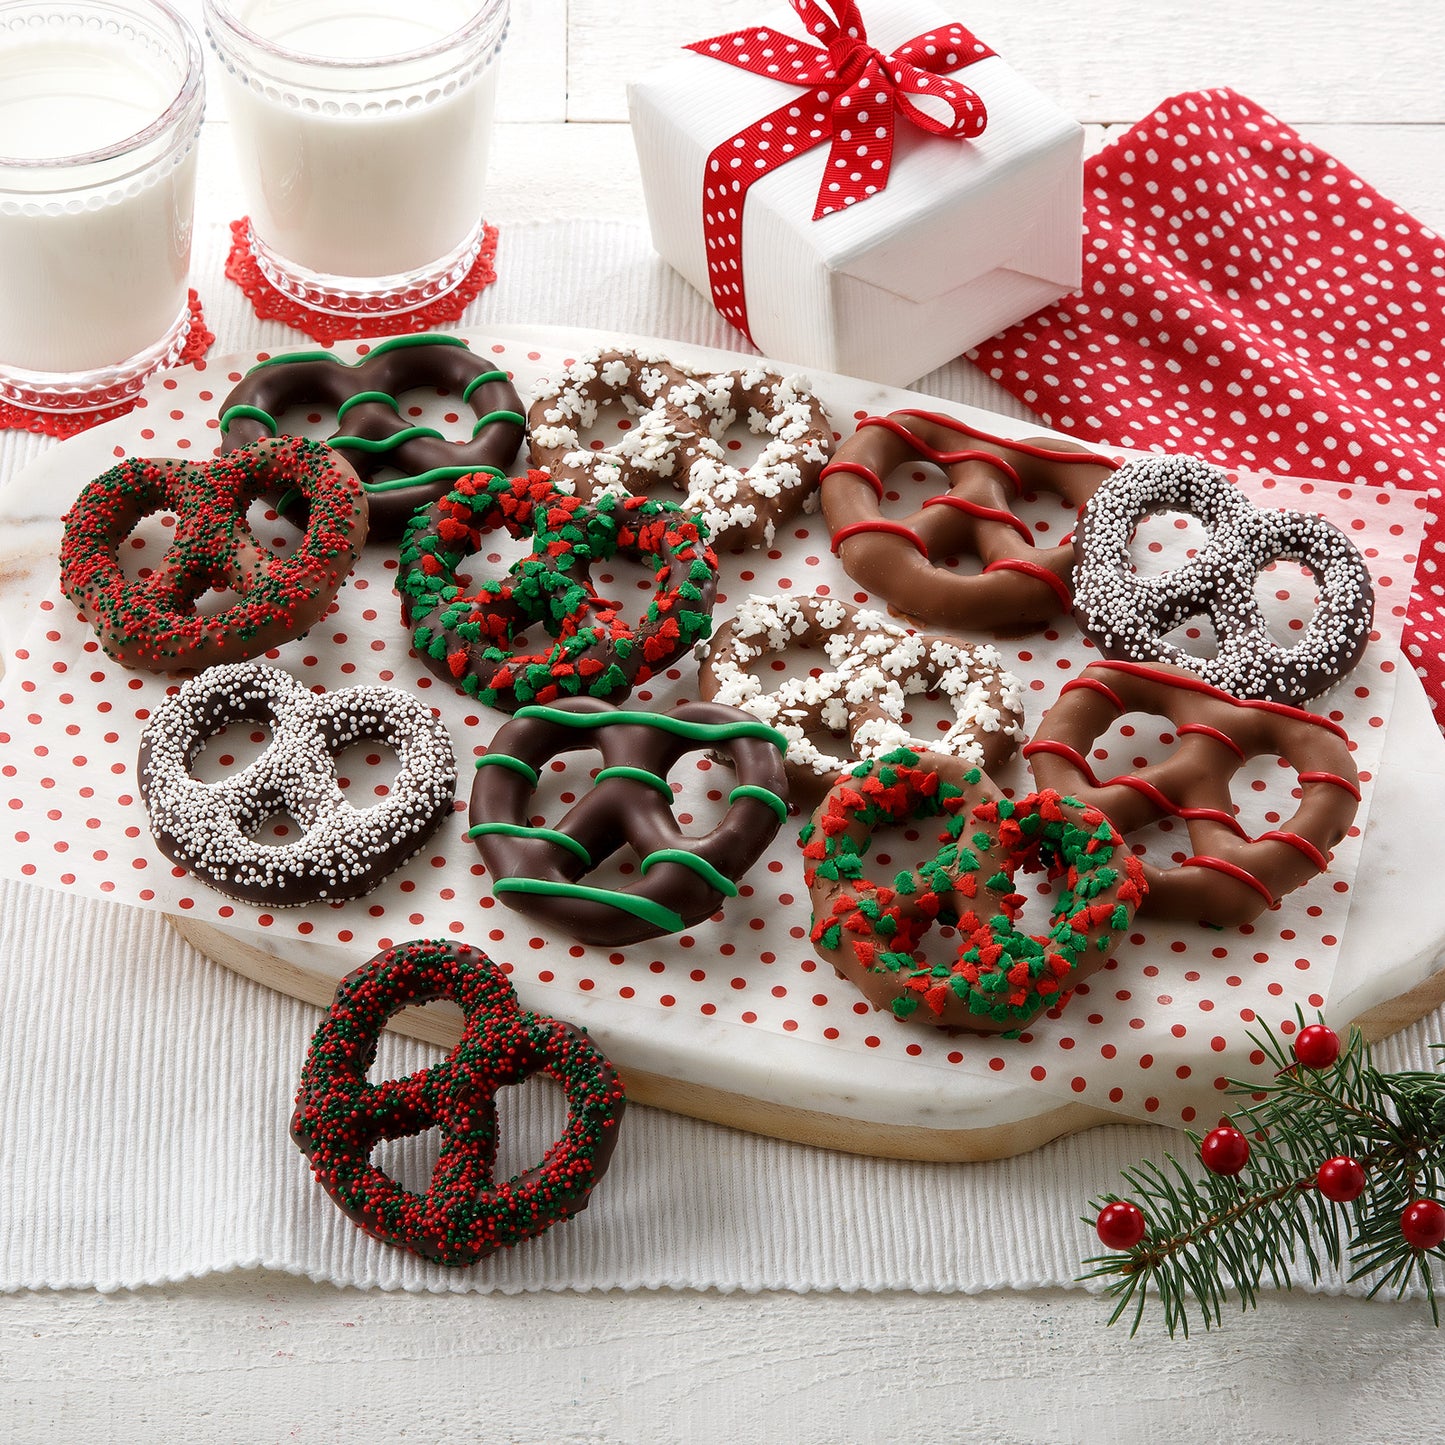 Twelve holiday-decorated chocolate-decorated pretzels